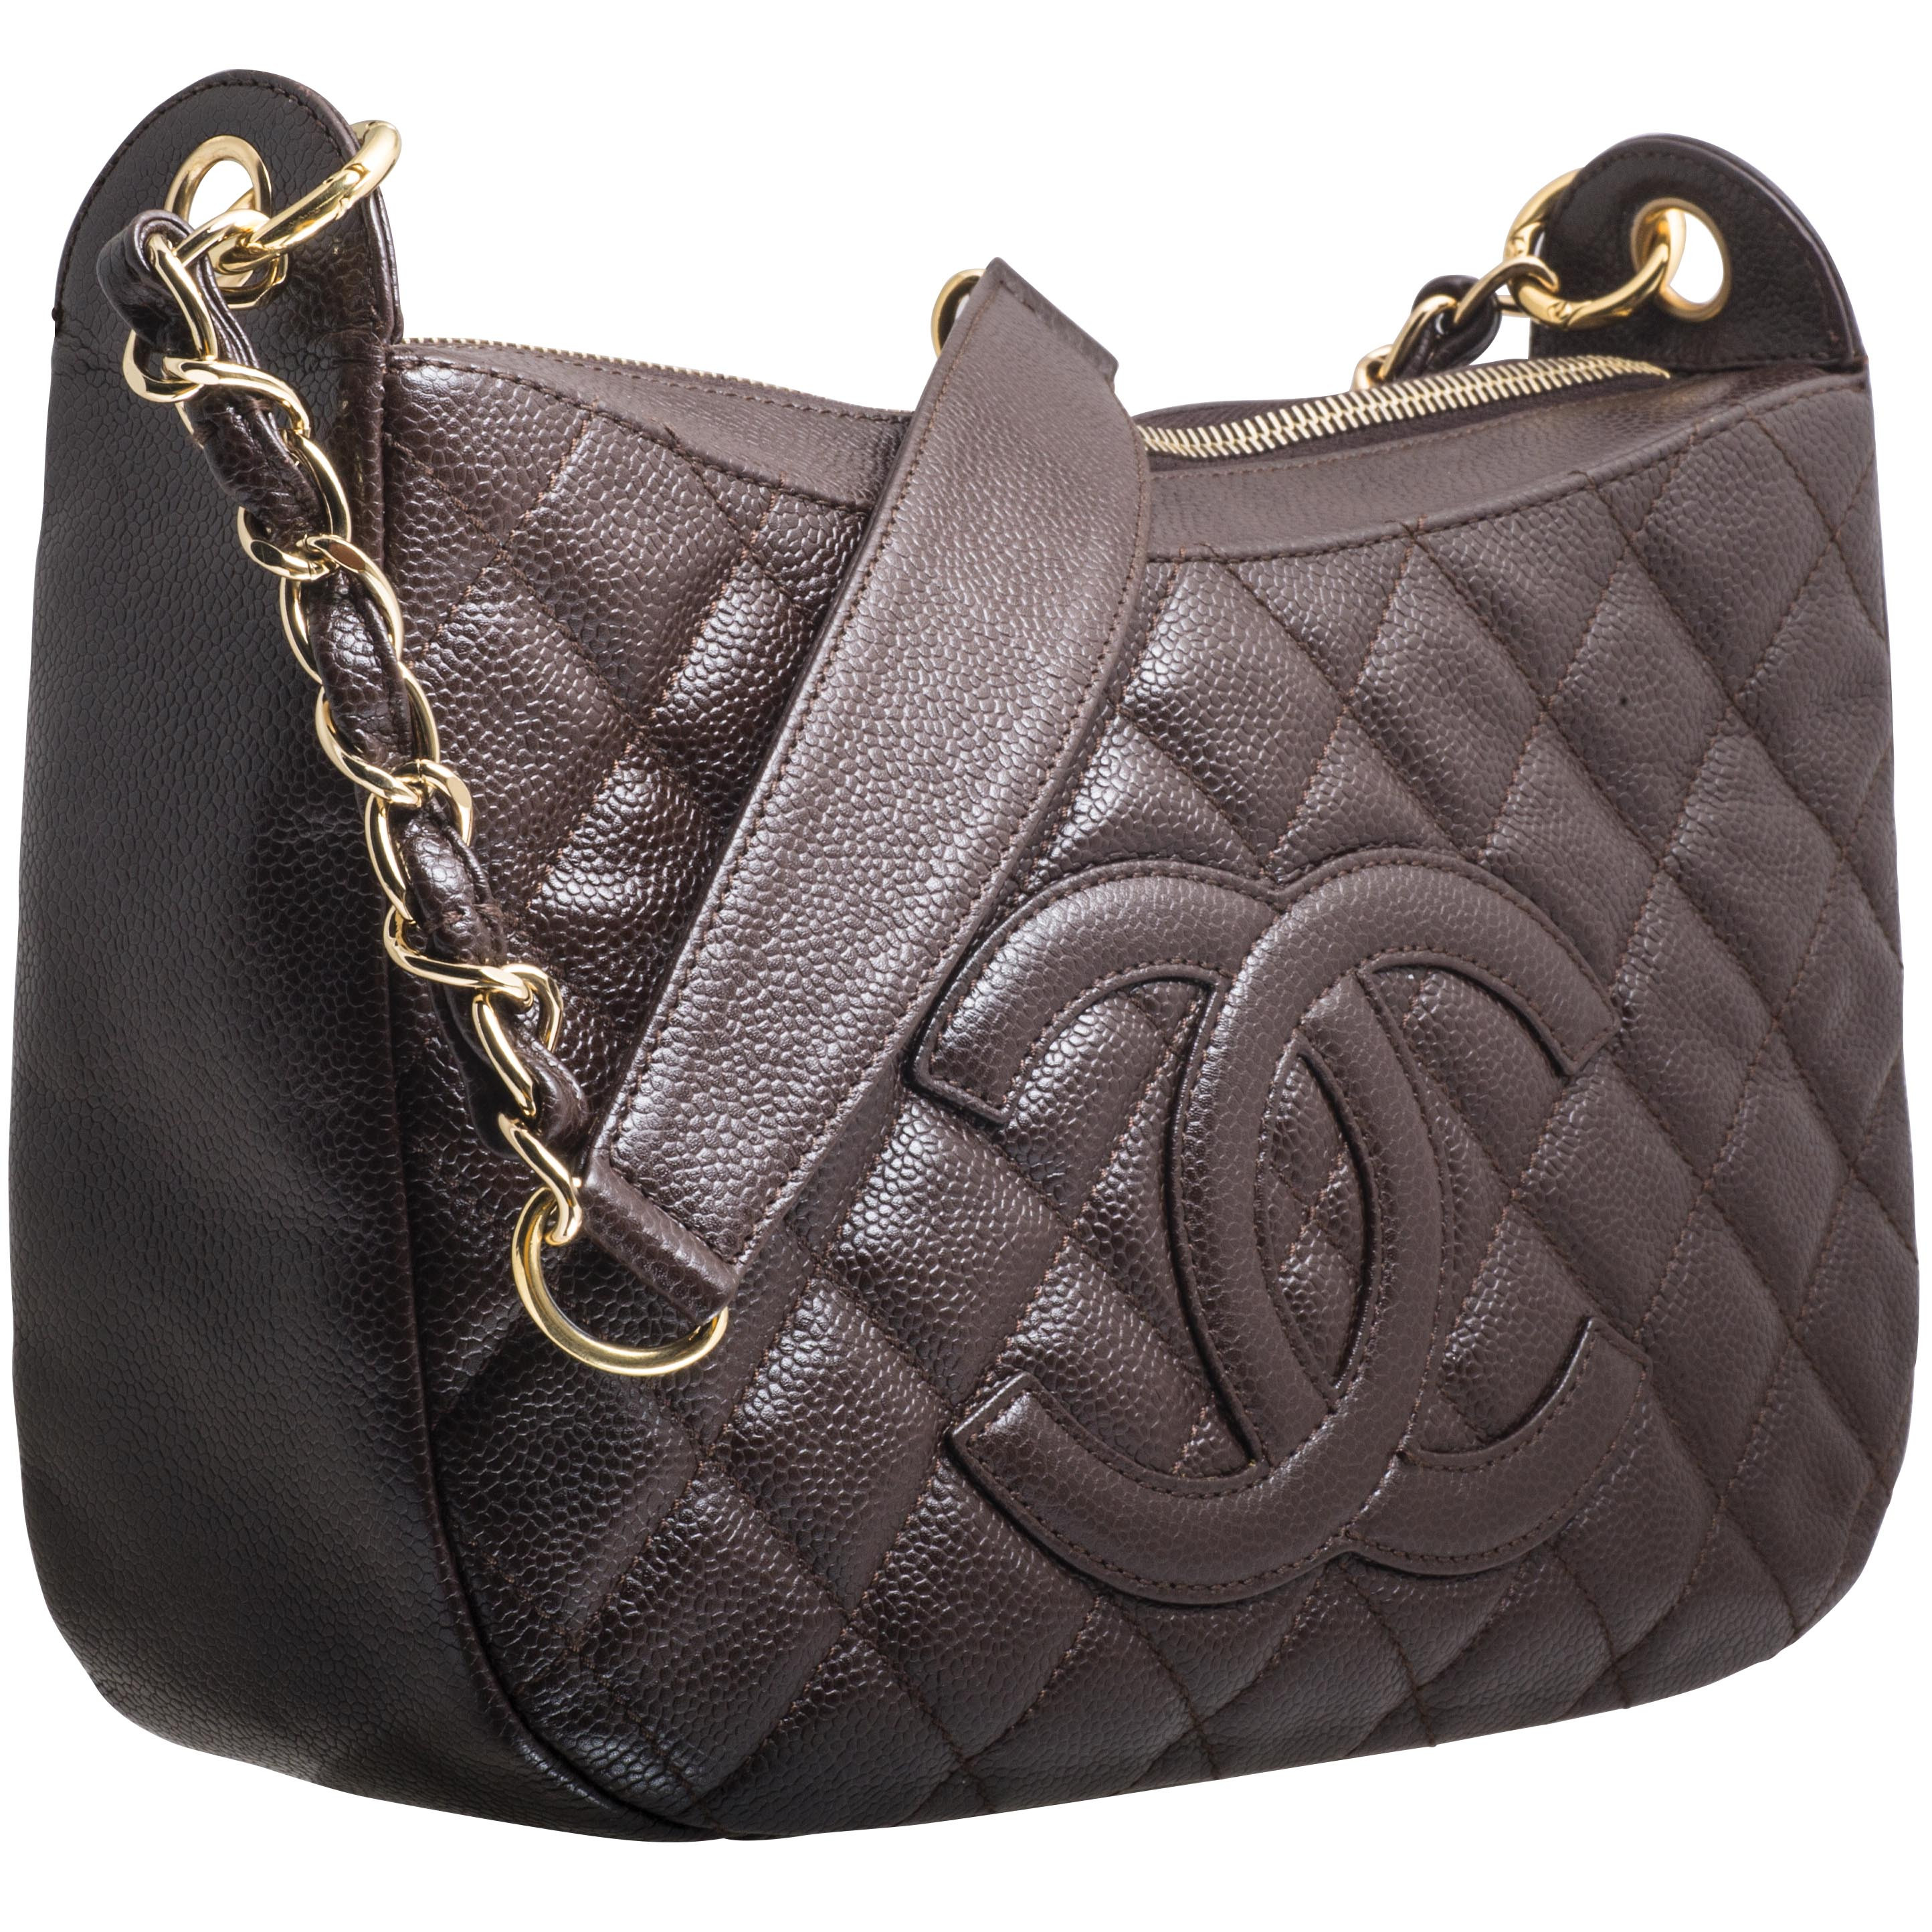 Chanel Dark Brown Quilted leather Vintage Shoulder Strap Chanel